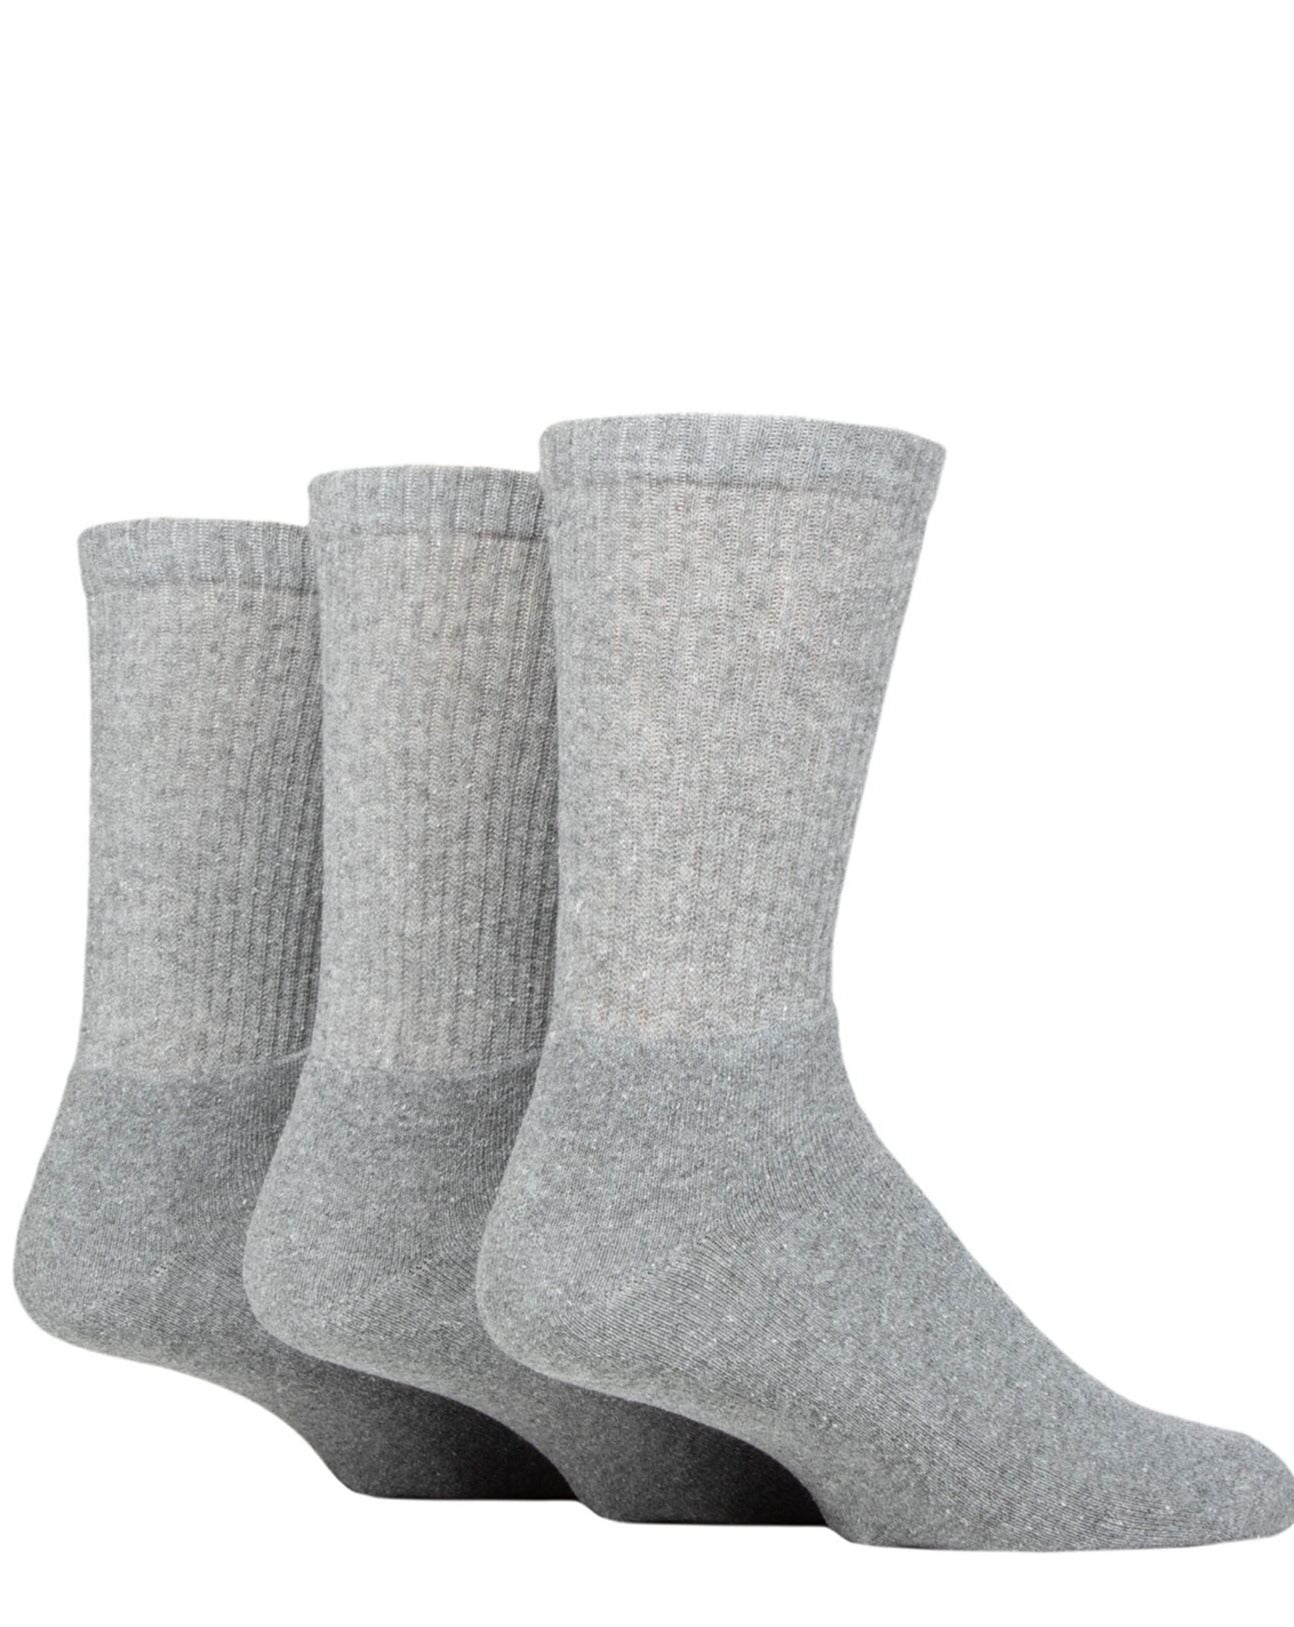 TORE 3Pk 100% Recycled Cotton Plain Crew Sports Socks - Men's